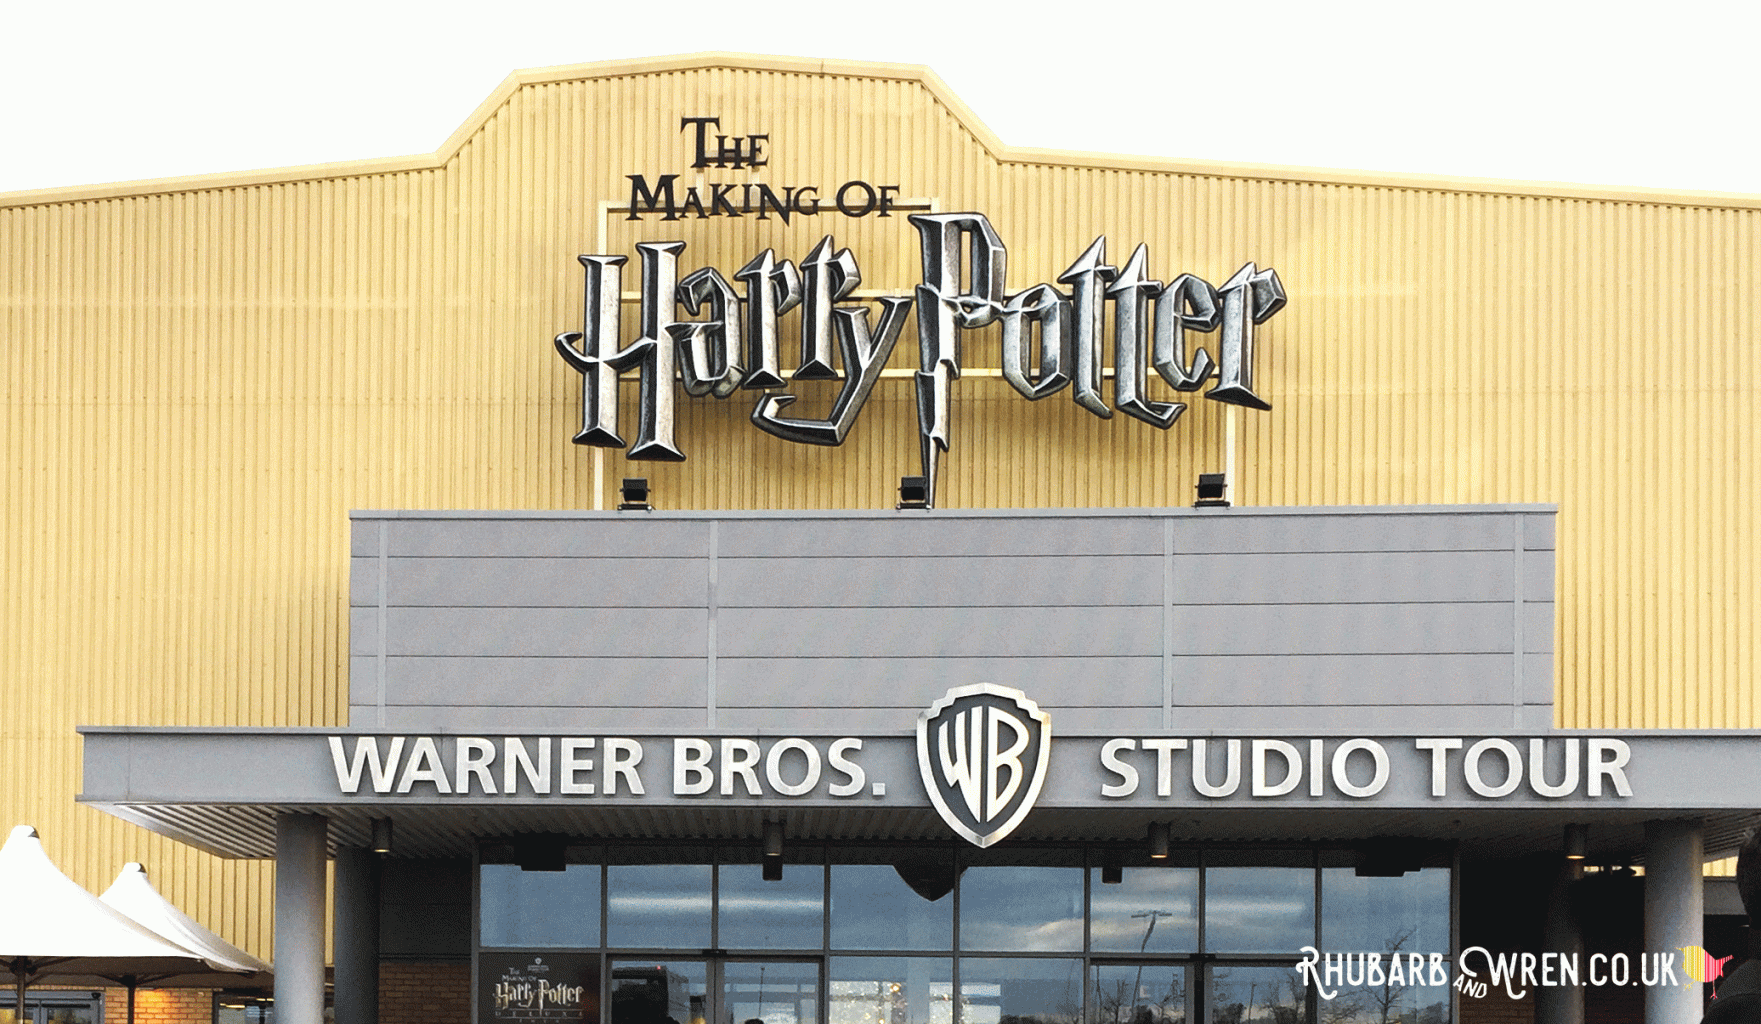 Entrance to the Making of Harry Potter Warner Bros. Studio Tour, UK